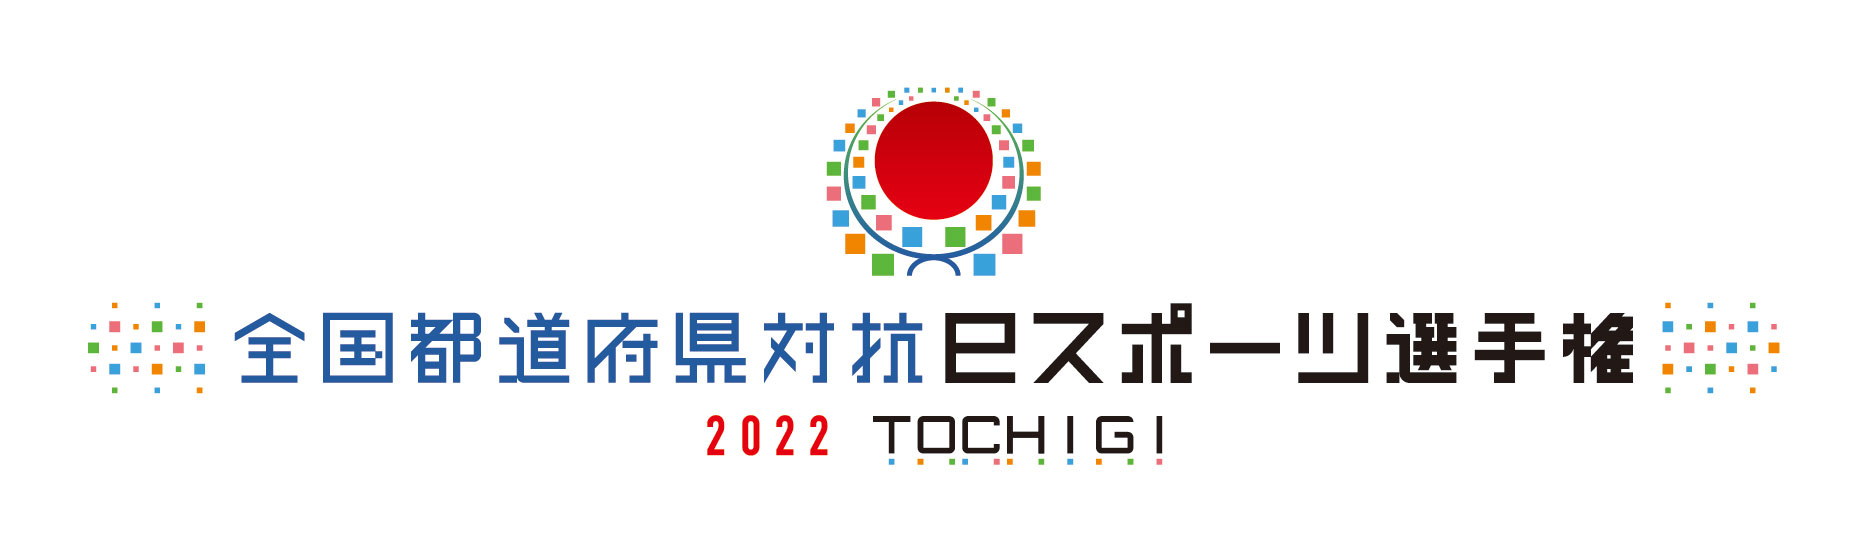 全国都道府県対抗eスポーツ選手権2022TOCHIGI